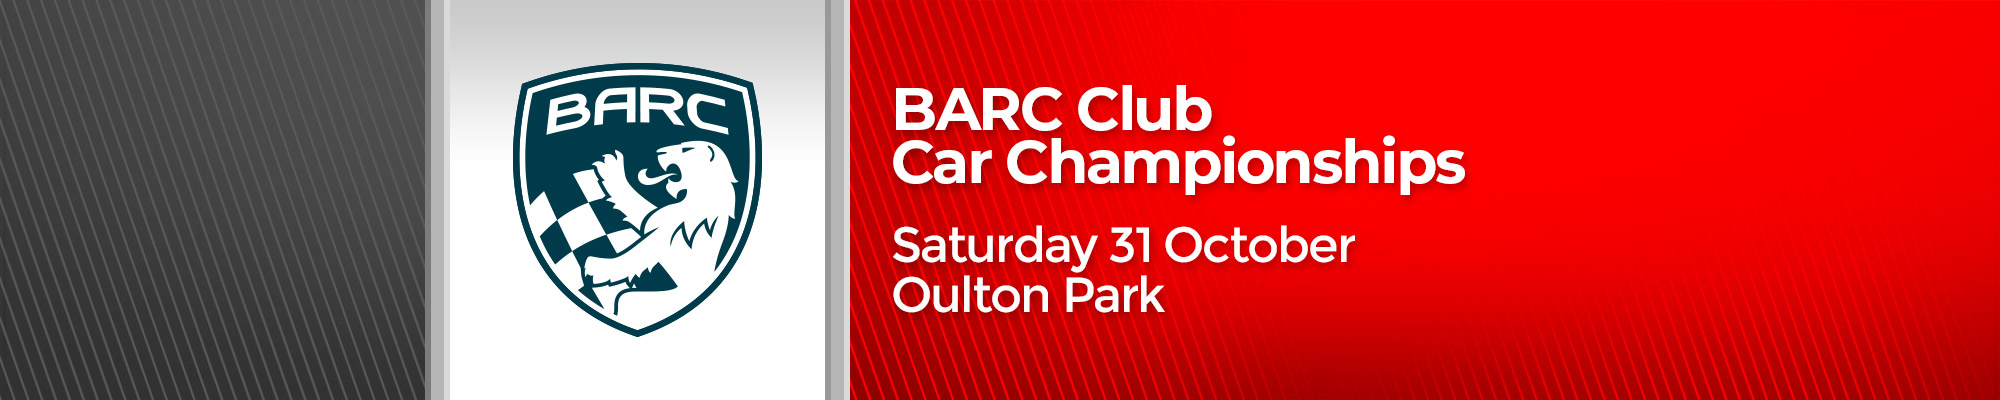  BARC Club Car Championships